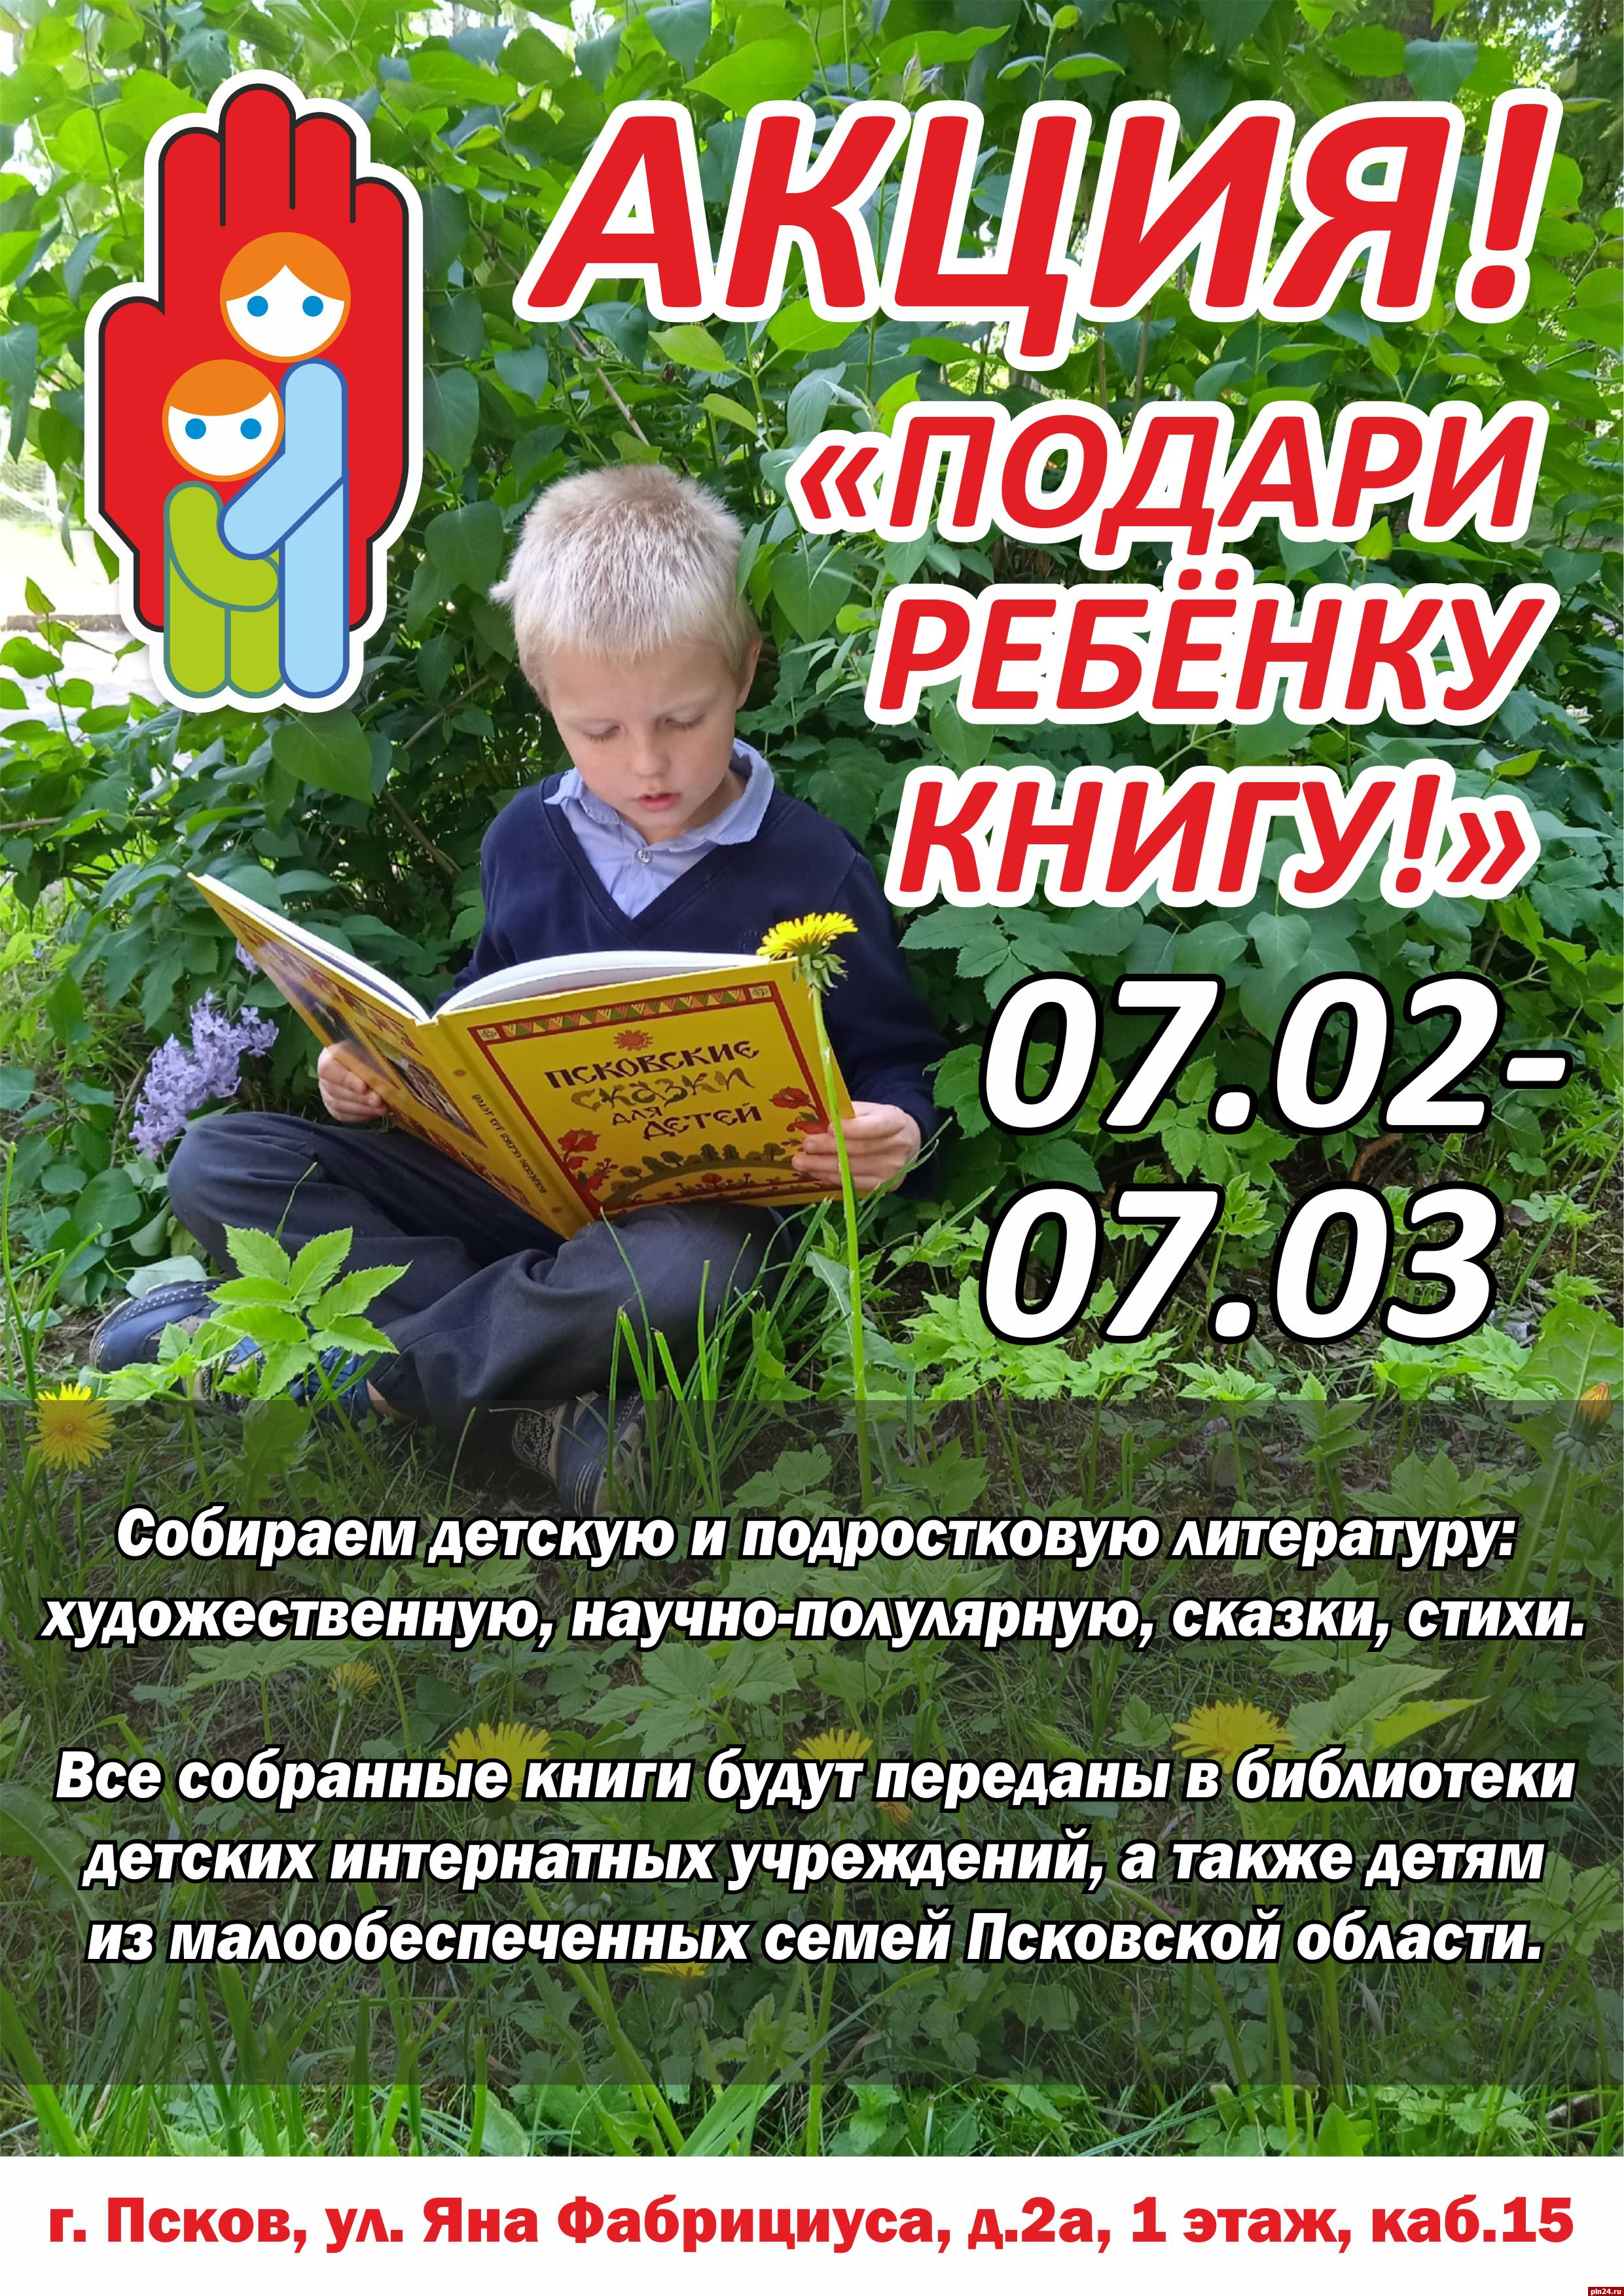 slep-kostroma.ru - Персональная детская книга